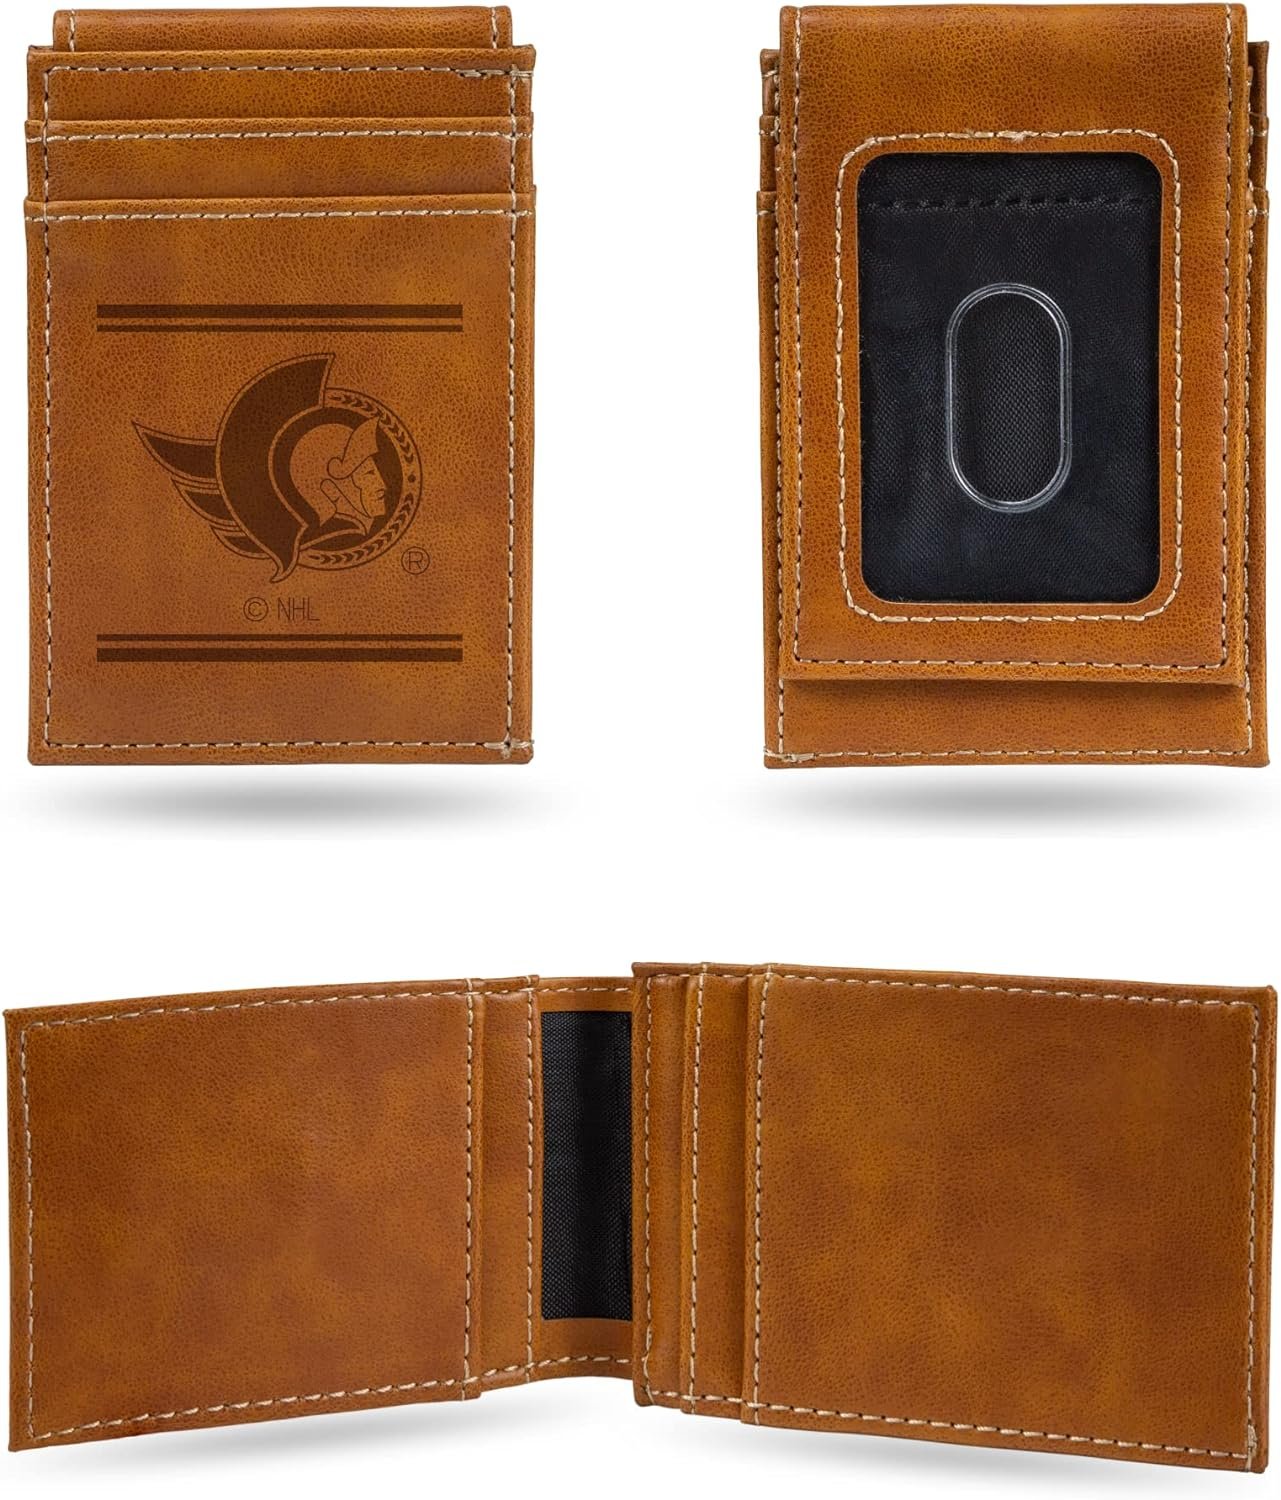 Ottawa Senators Premium Brown Leather Wallet, Front Pocket Magnetic Money Clip, Laser Engraved, Vegan